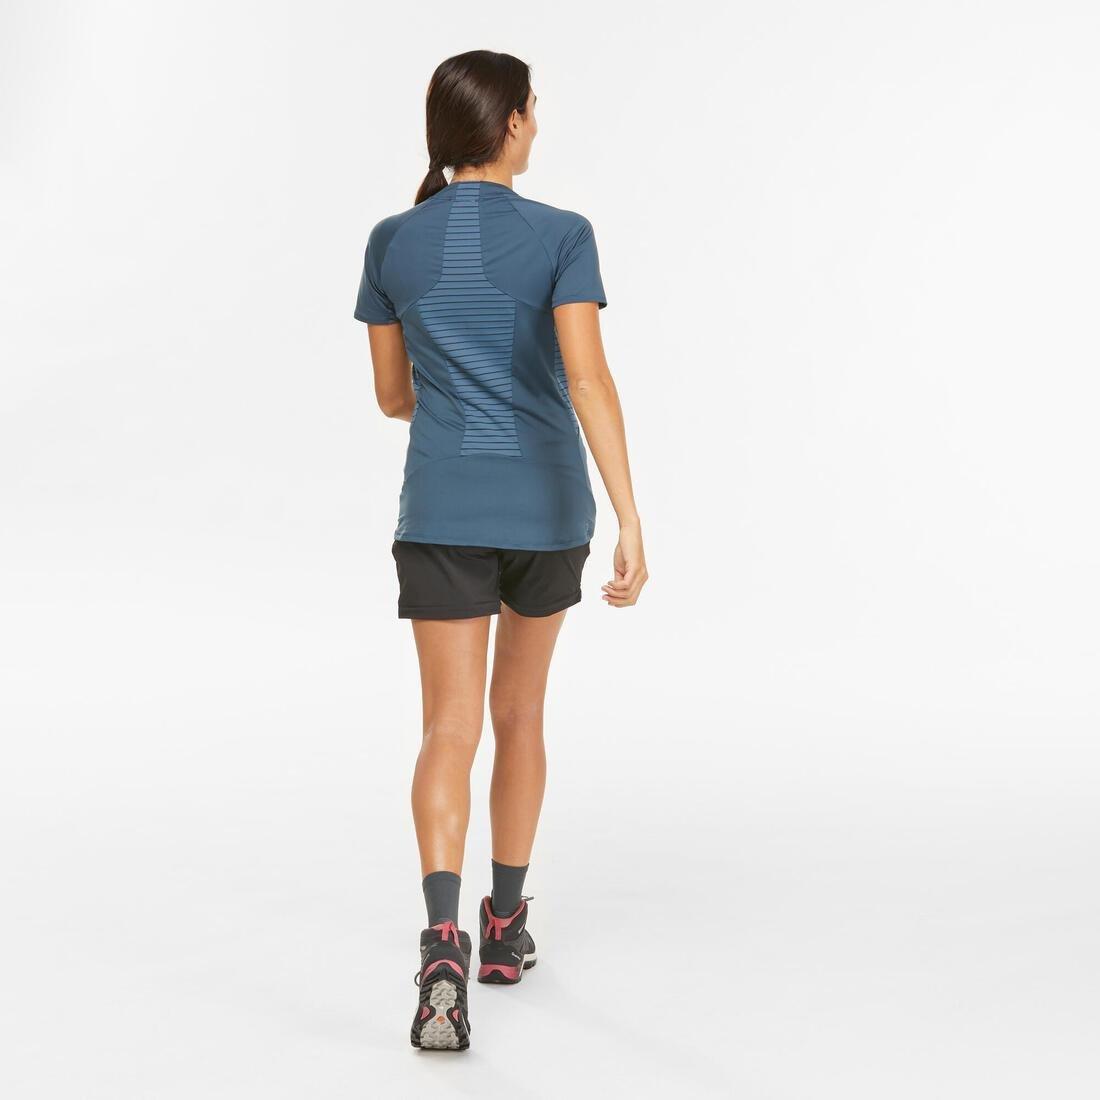 QUECHUA - Women Mountain Walking Short-Sleeved T-Shirt - Mh500, Grey